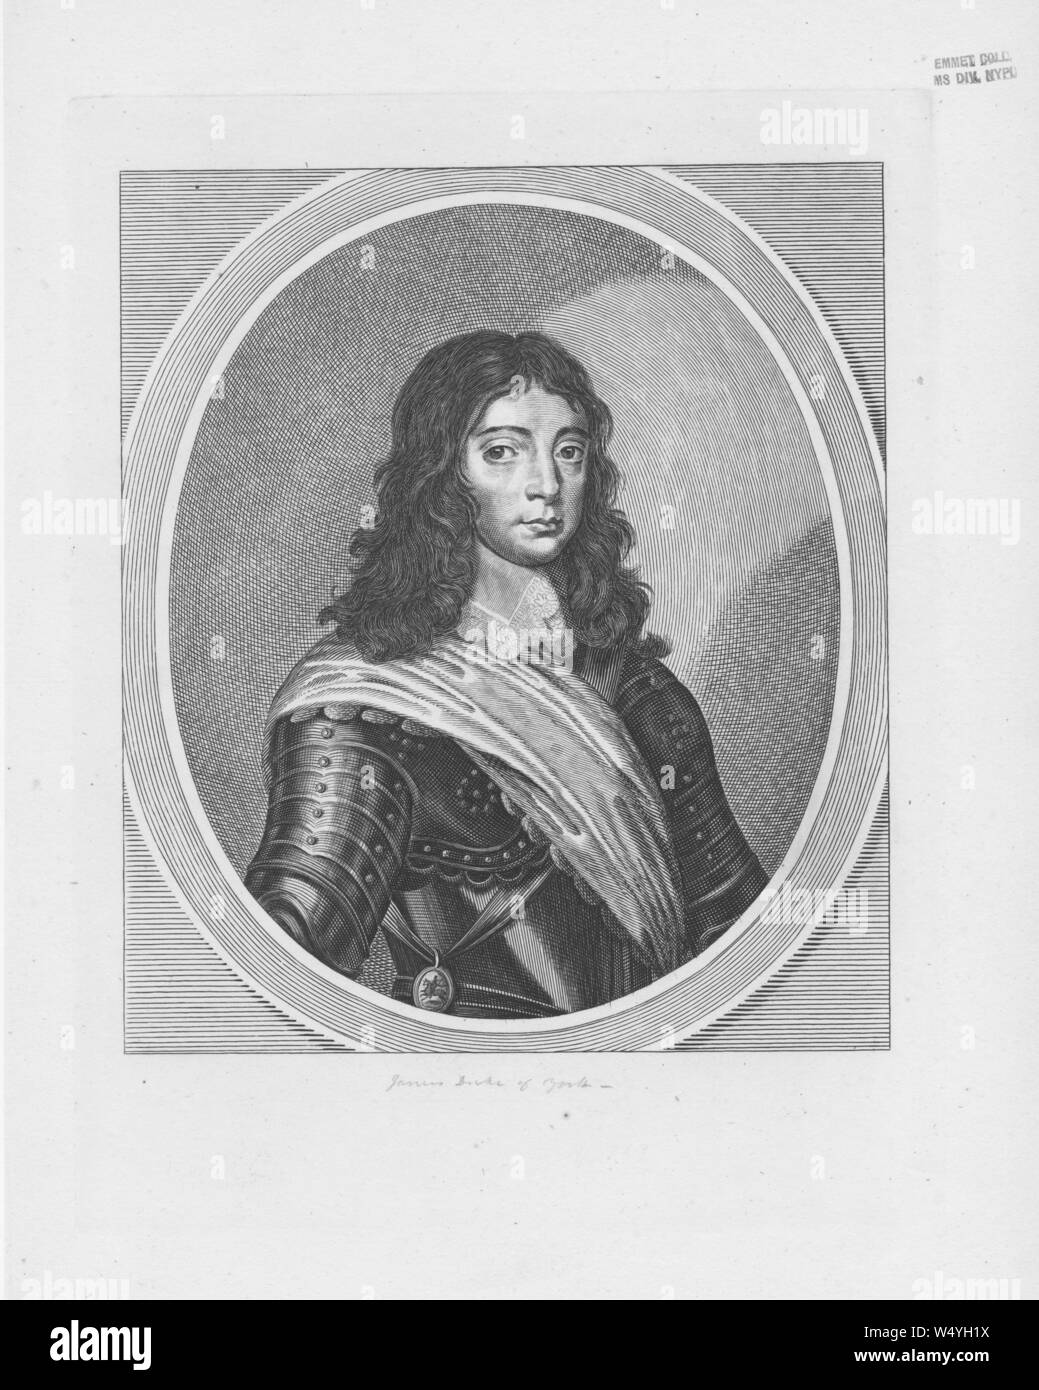 Engraved portrait of James II of England, King of England, Ireland, and Scotland, 1700. () Stock Photo